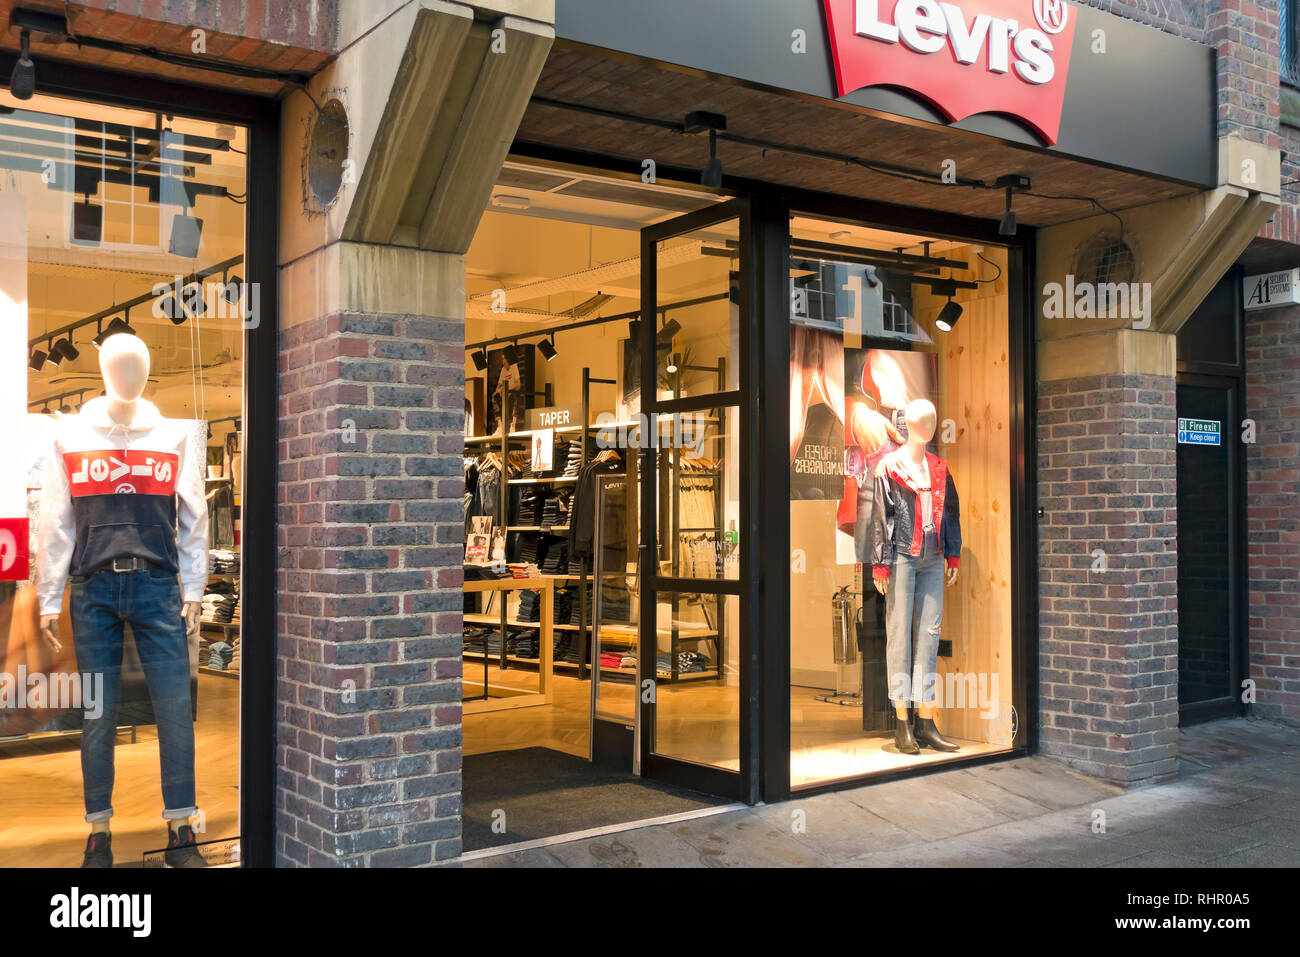 Levi's clothing clothes store shop window York North Yorkshire England UK United Kingdom GB Great Britain Stock Photo